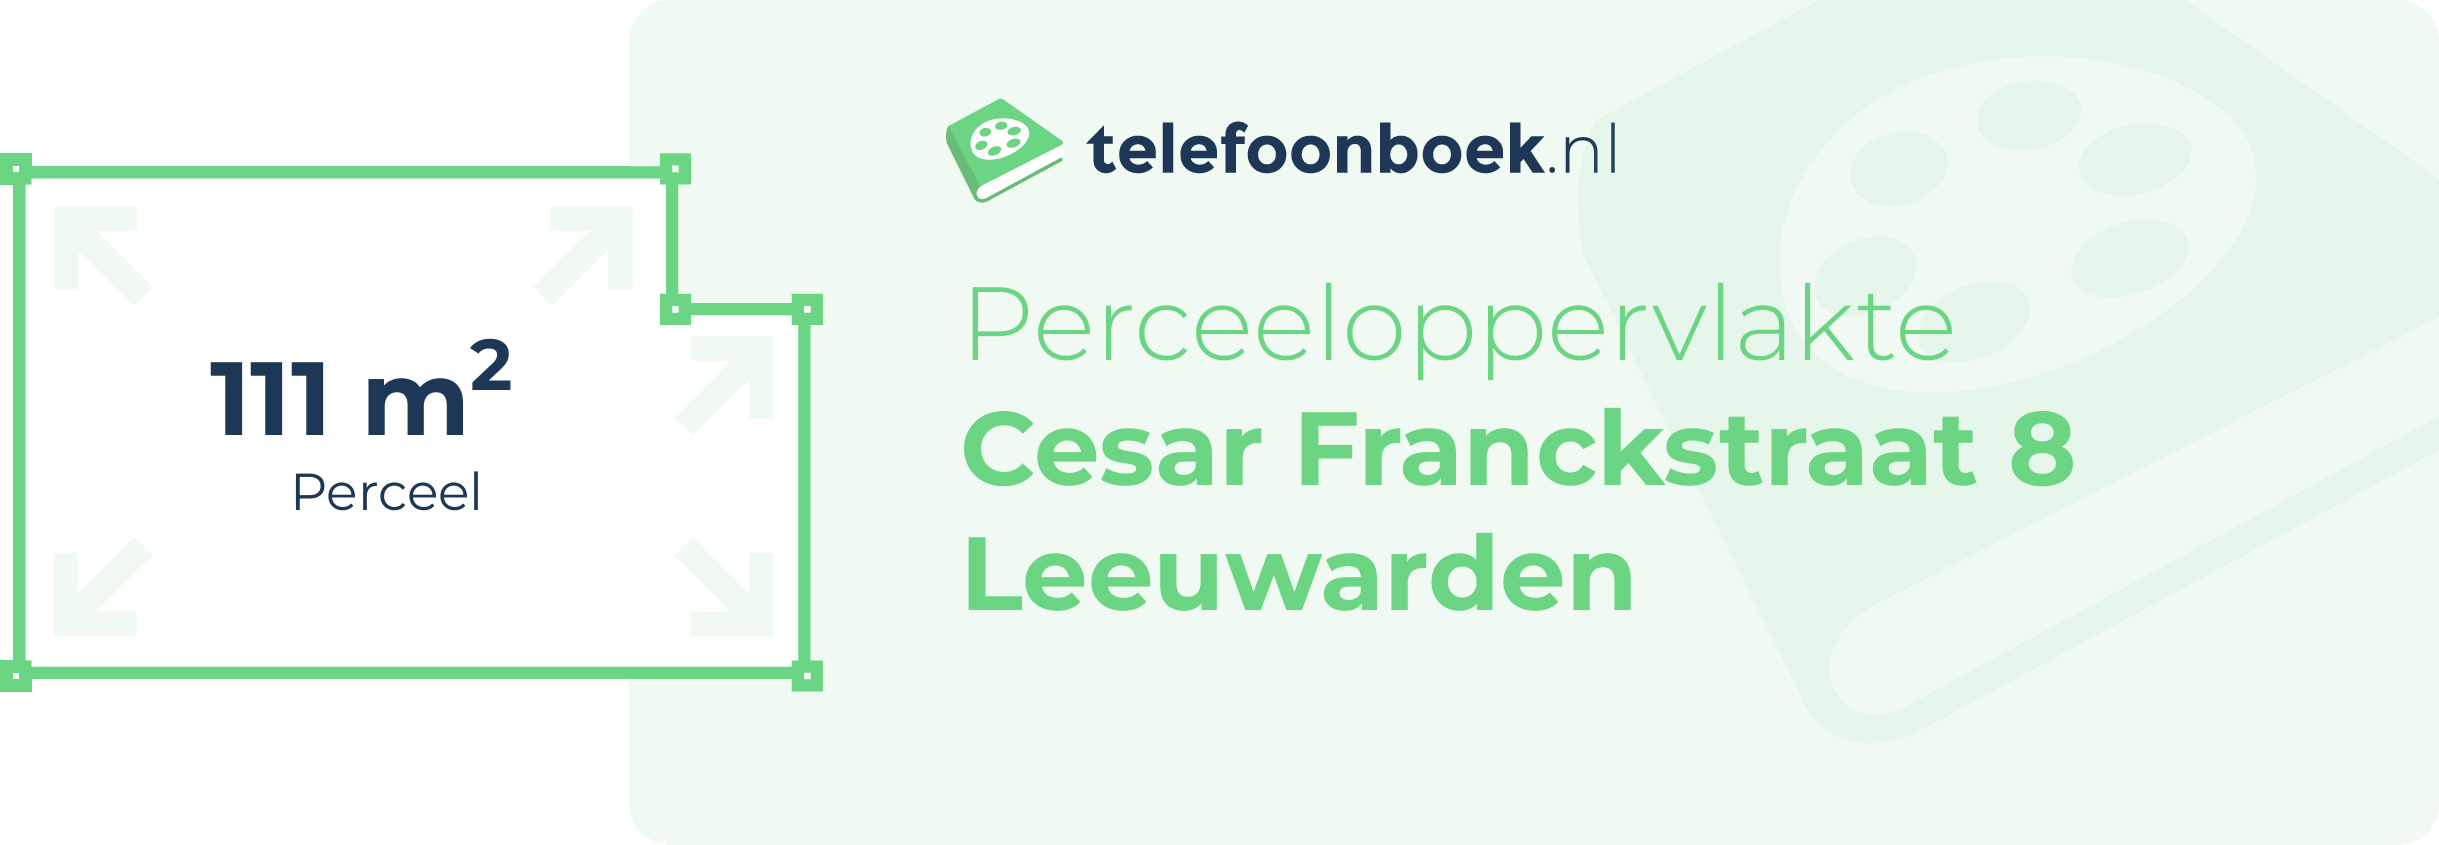 Perceeloppervlakte Cesar Franckstraat 8 Leeuwarden